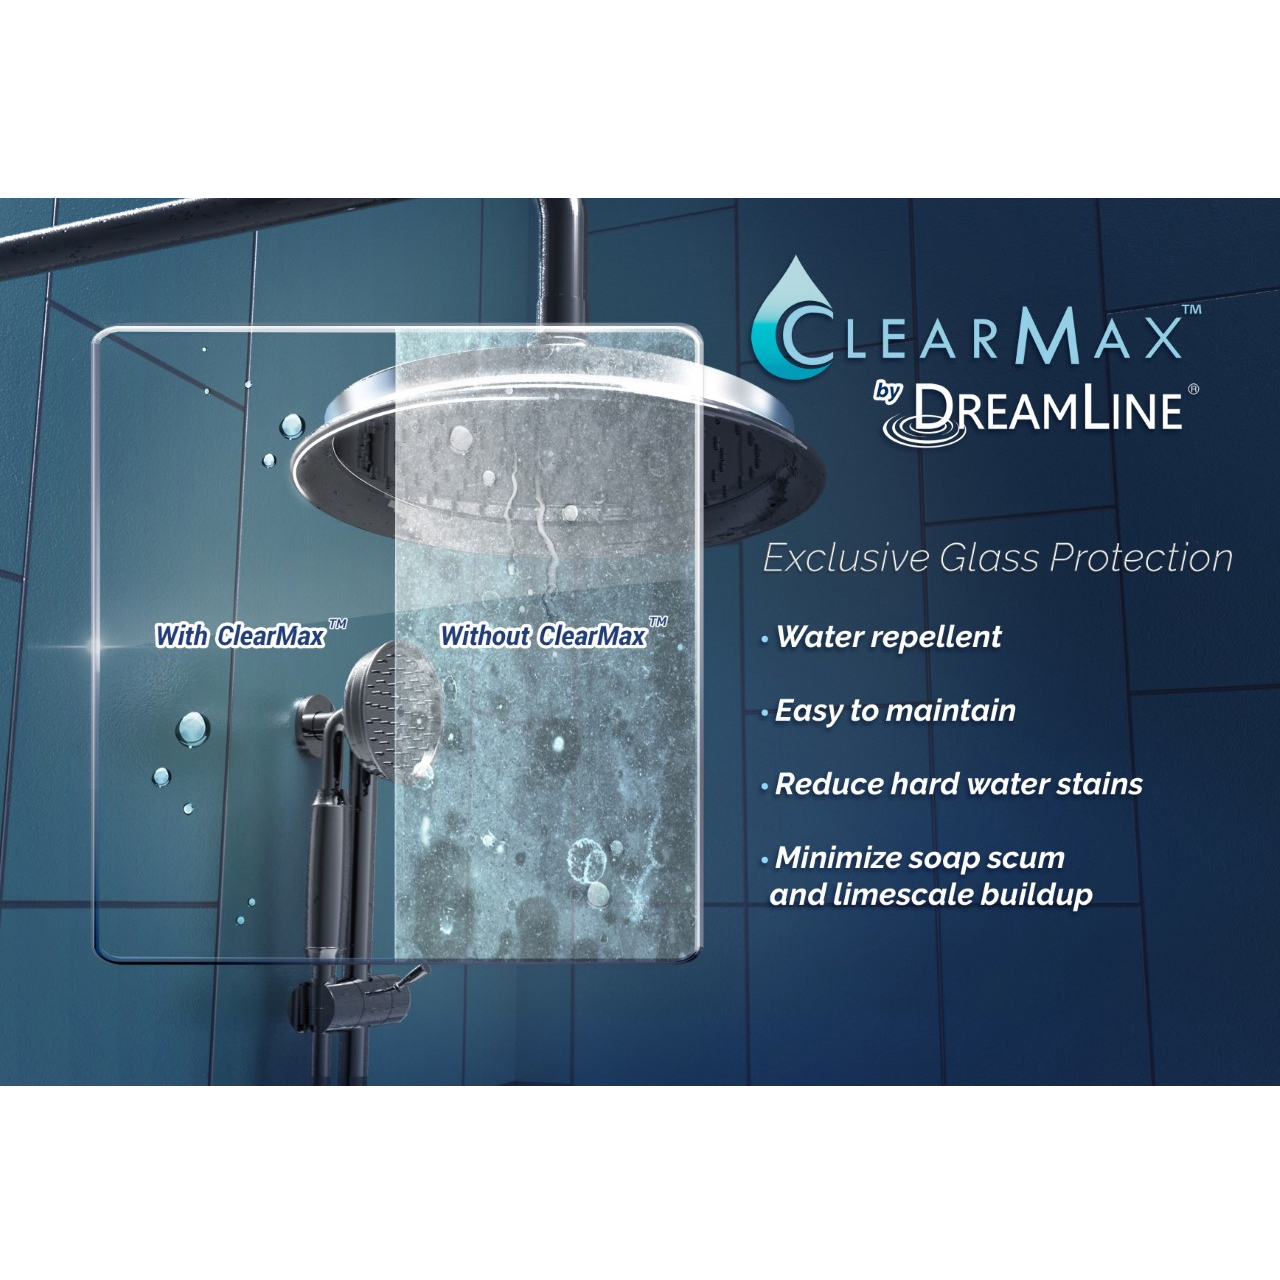 DreamLine SHEN-24390300-06 Unidoor Plus Hinged Shower Enclosure In Oil Rubbed Bronze Finish Hardware